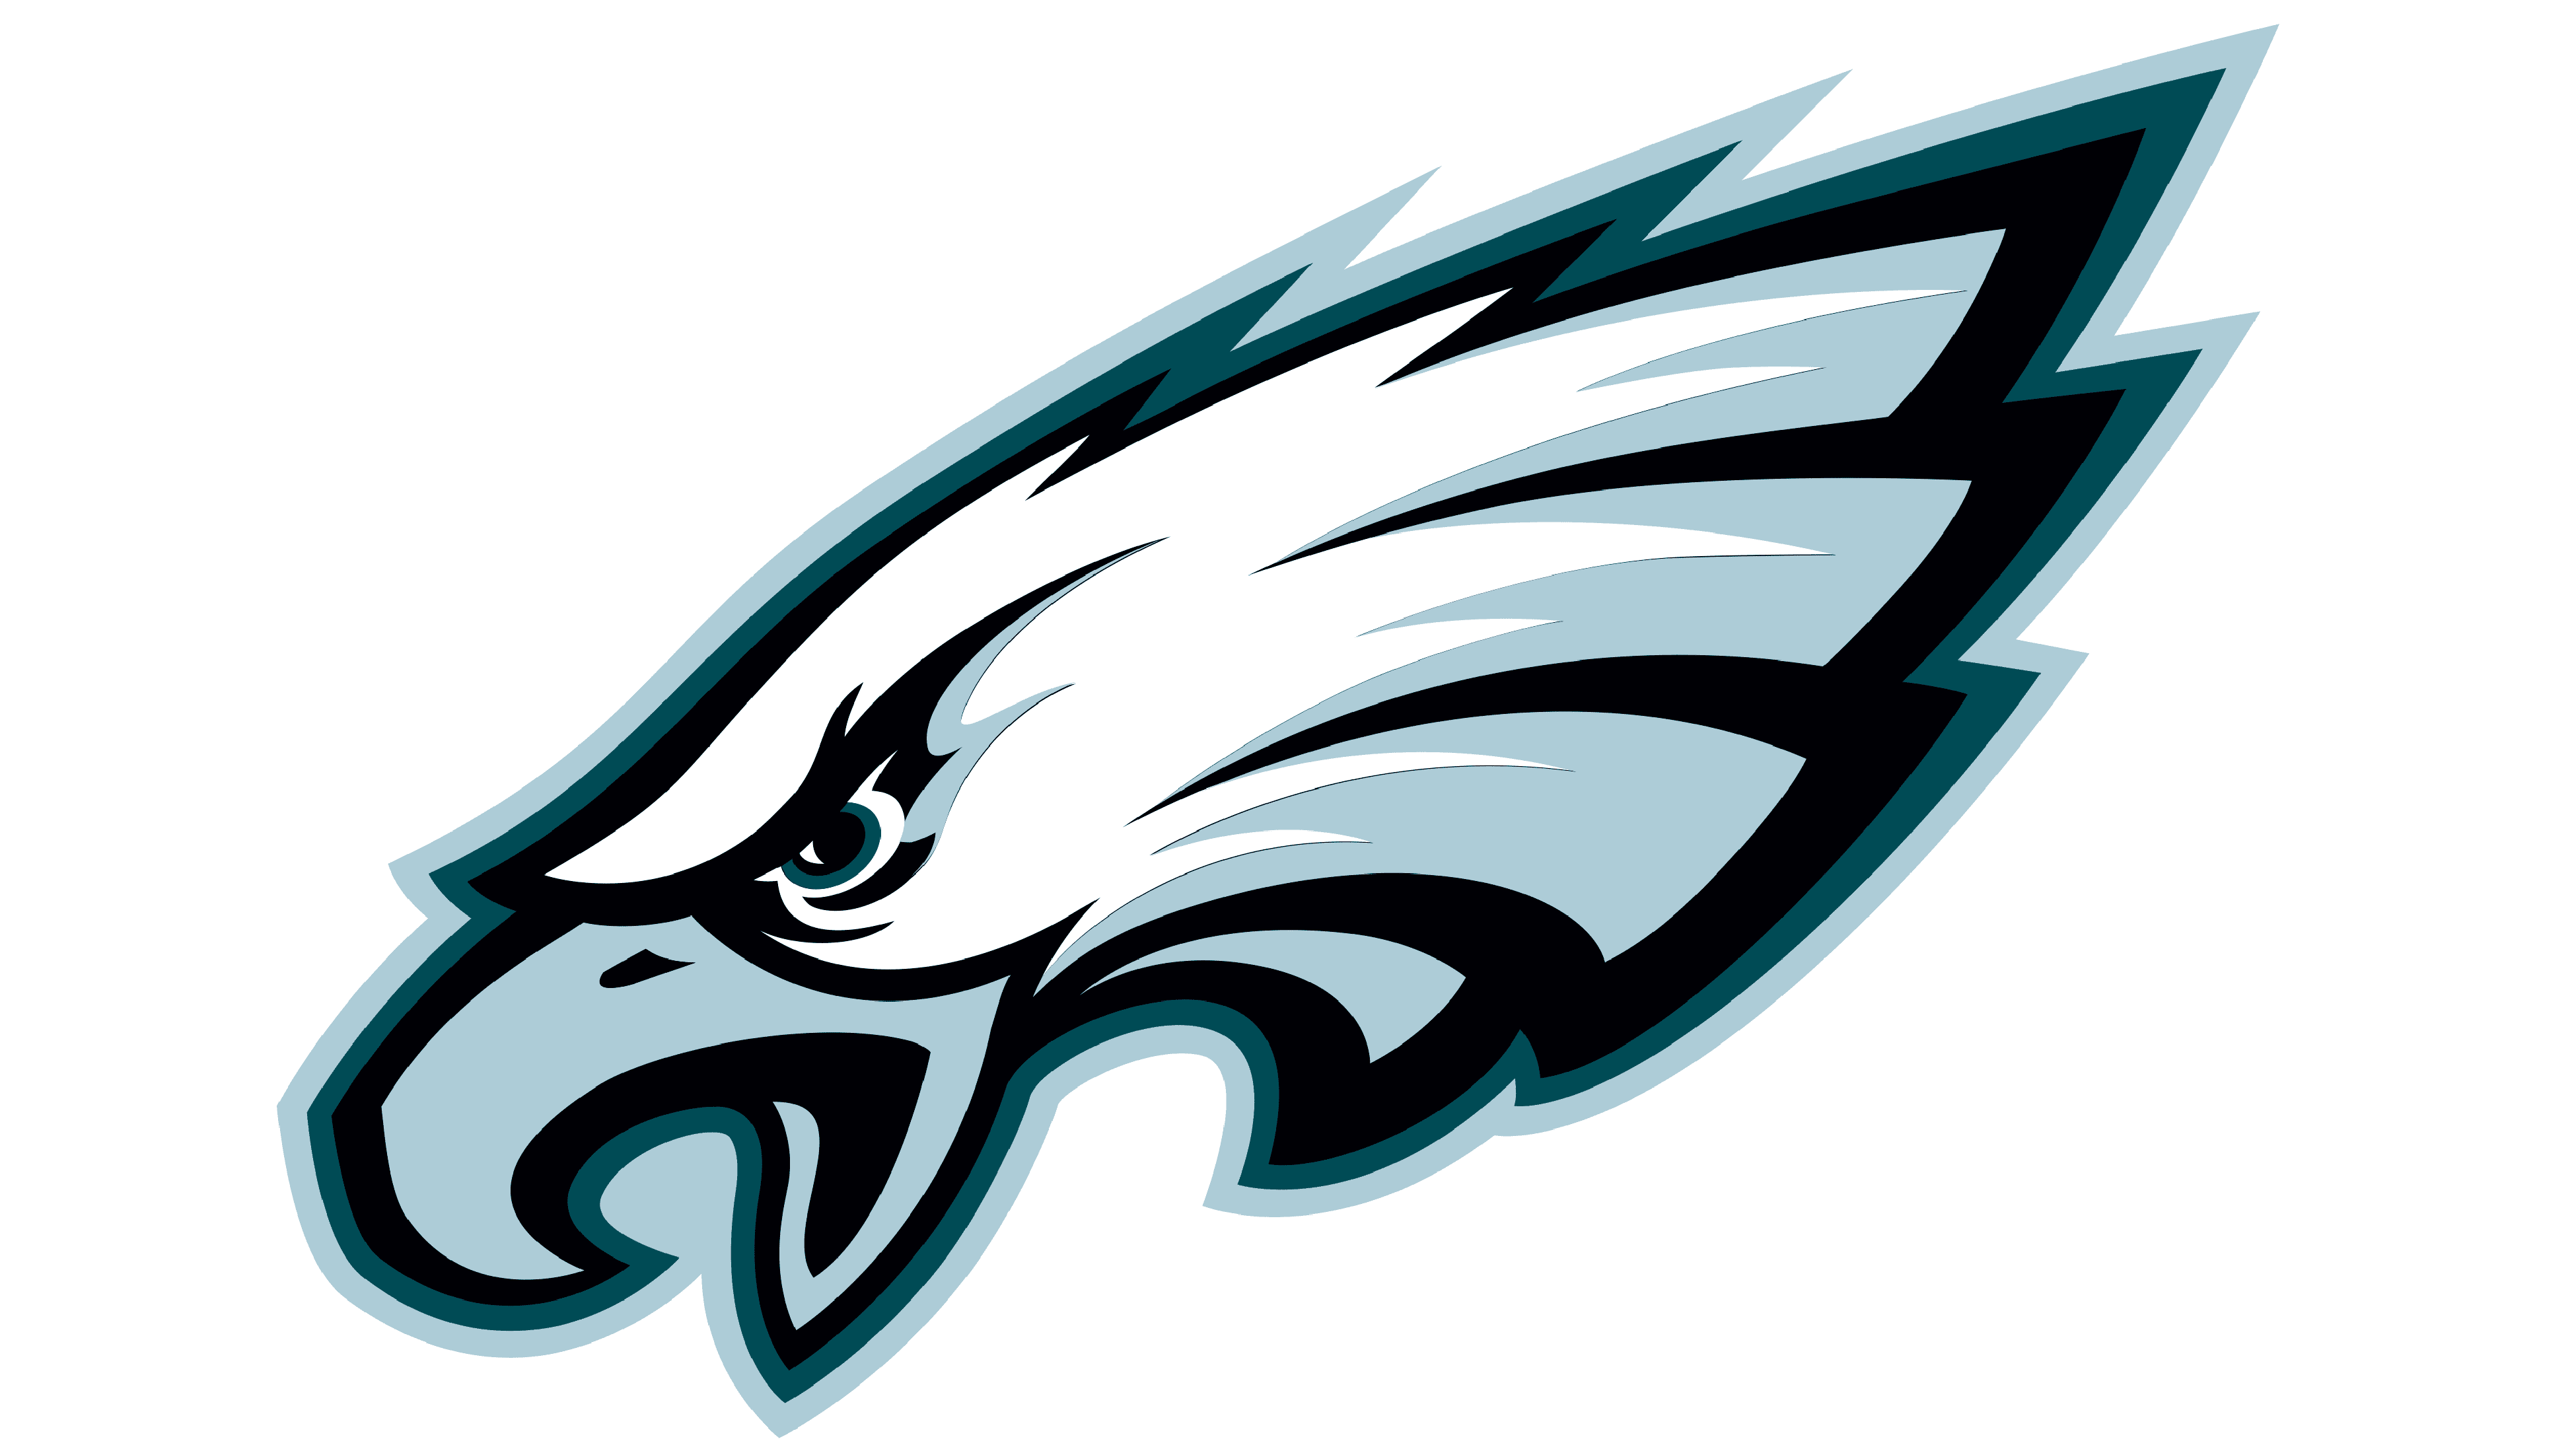 Philadelphia-Eagles-Logo